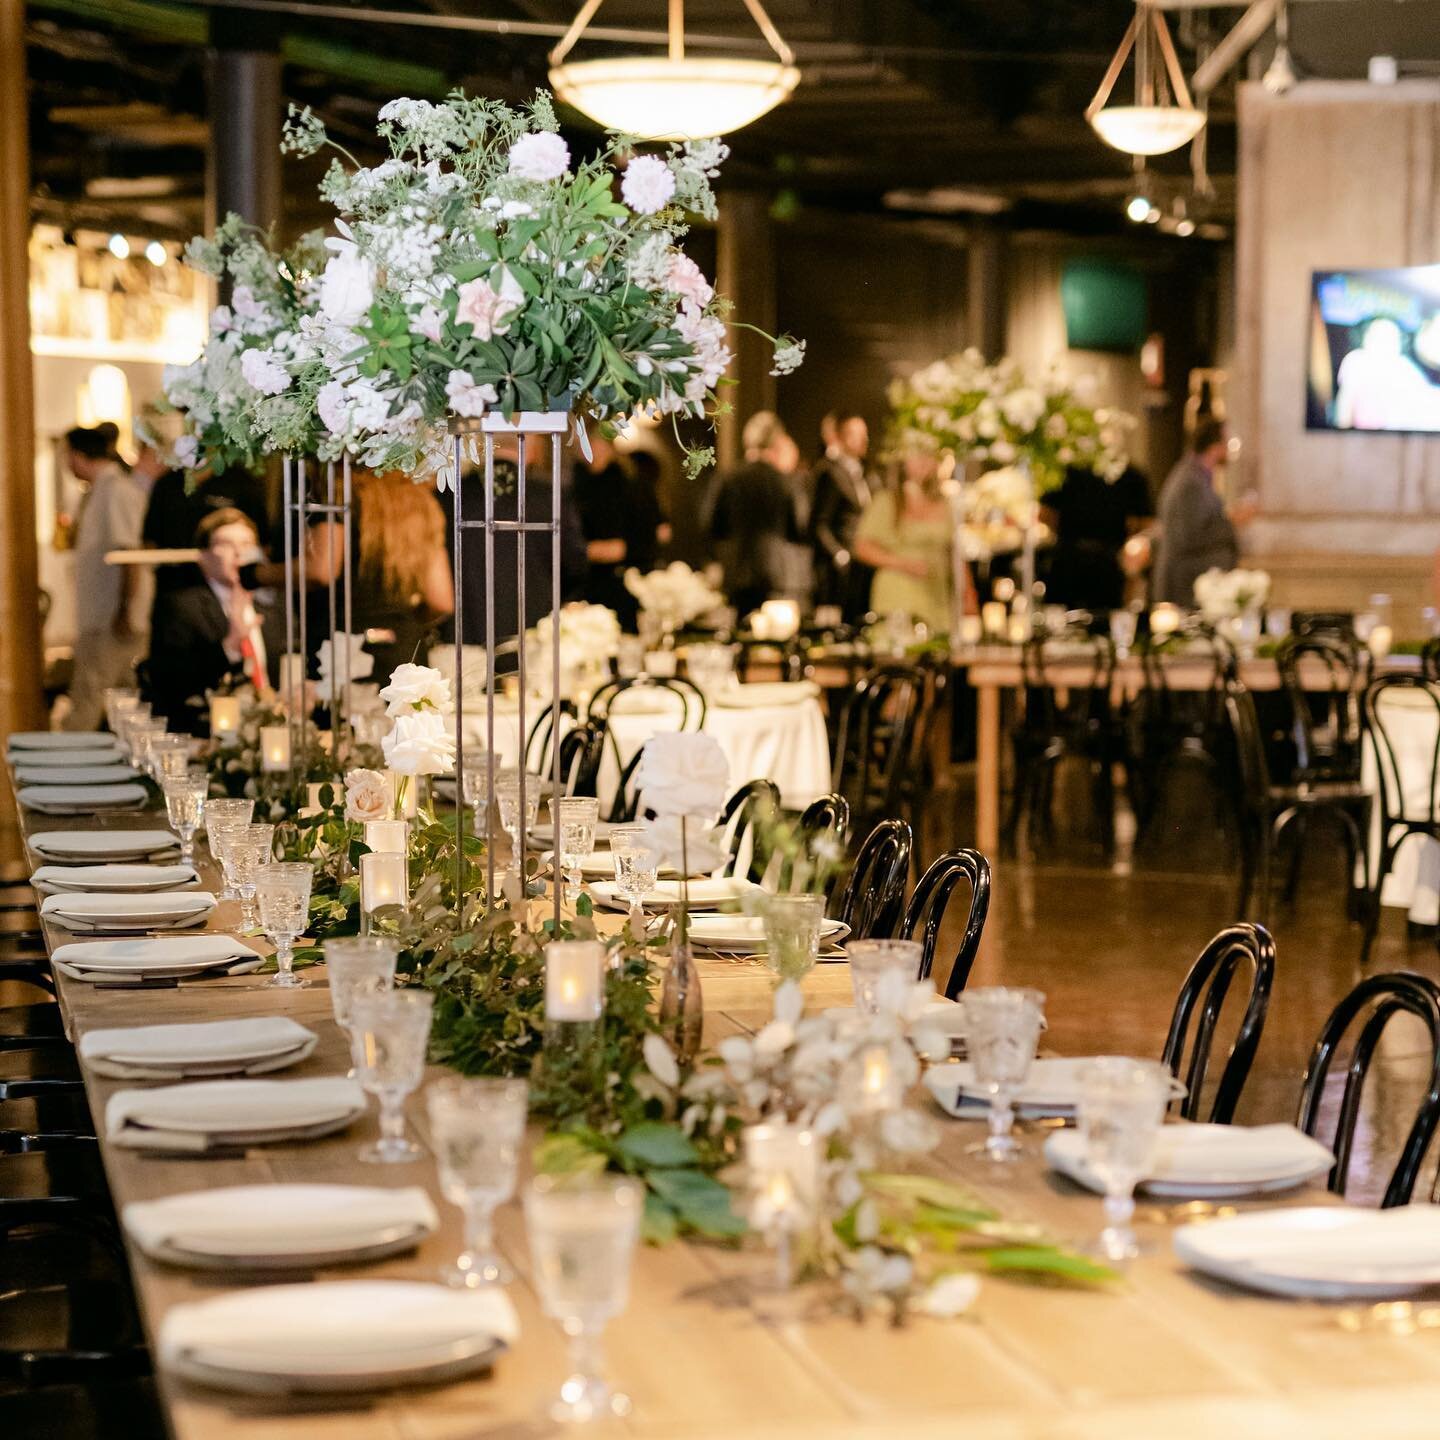 Reception tables ☑️
Photo @mariagloerphotography 
#nashvilleweddings #receptionflowers #headtable #elevated #timelesswedding #venuedesign #classicbride  #nashvilleweddingflorist #weddinginspo